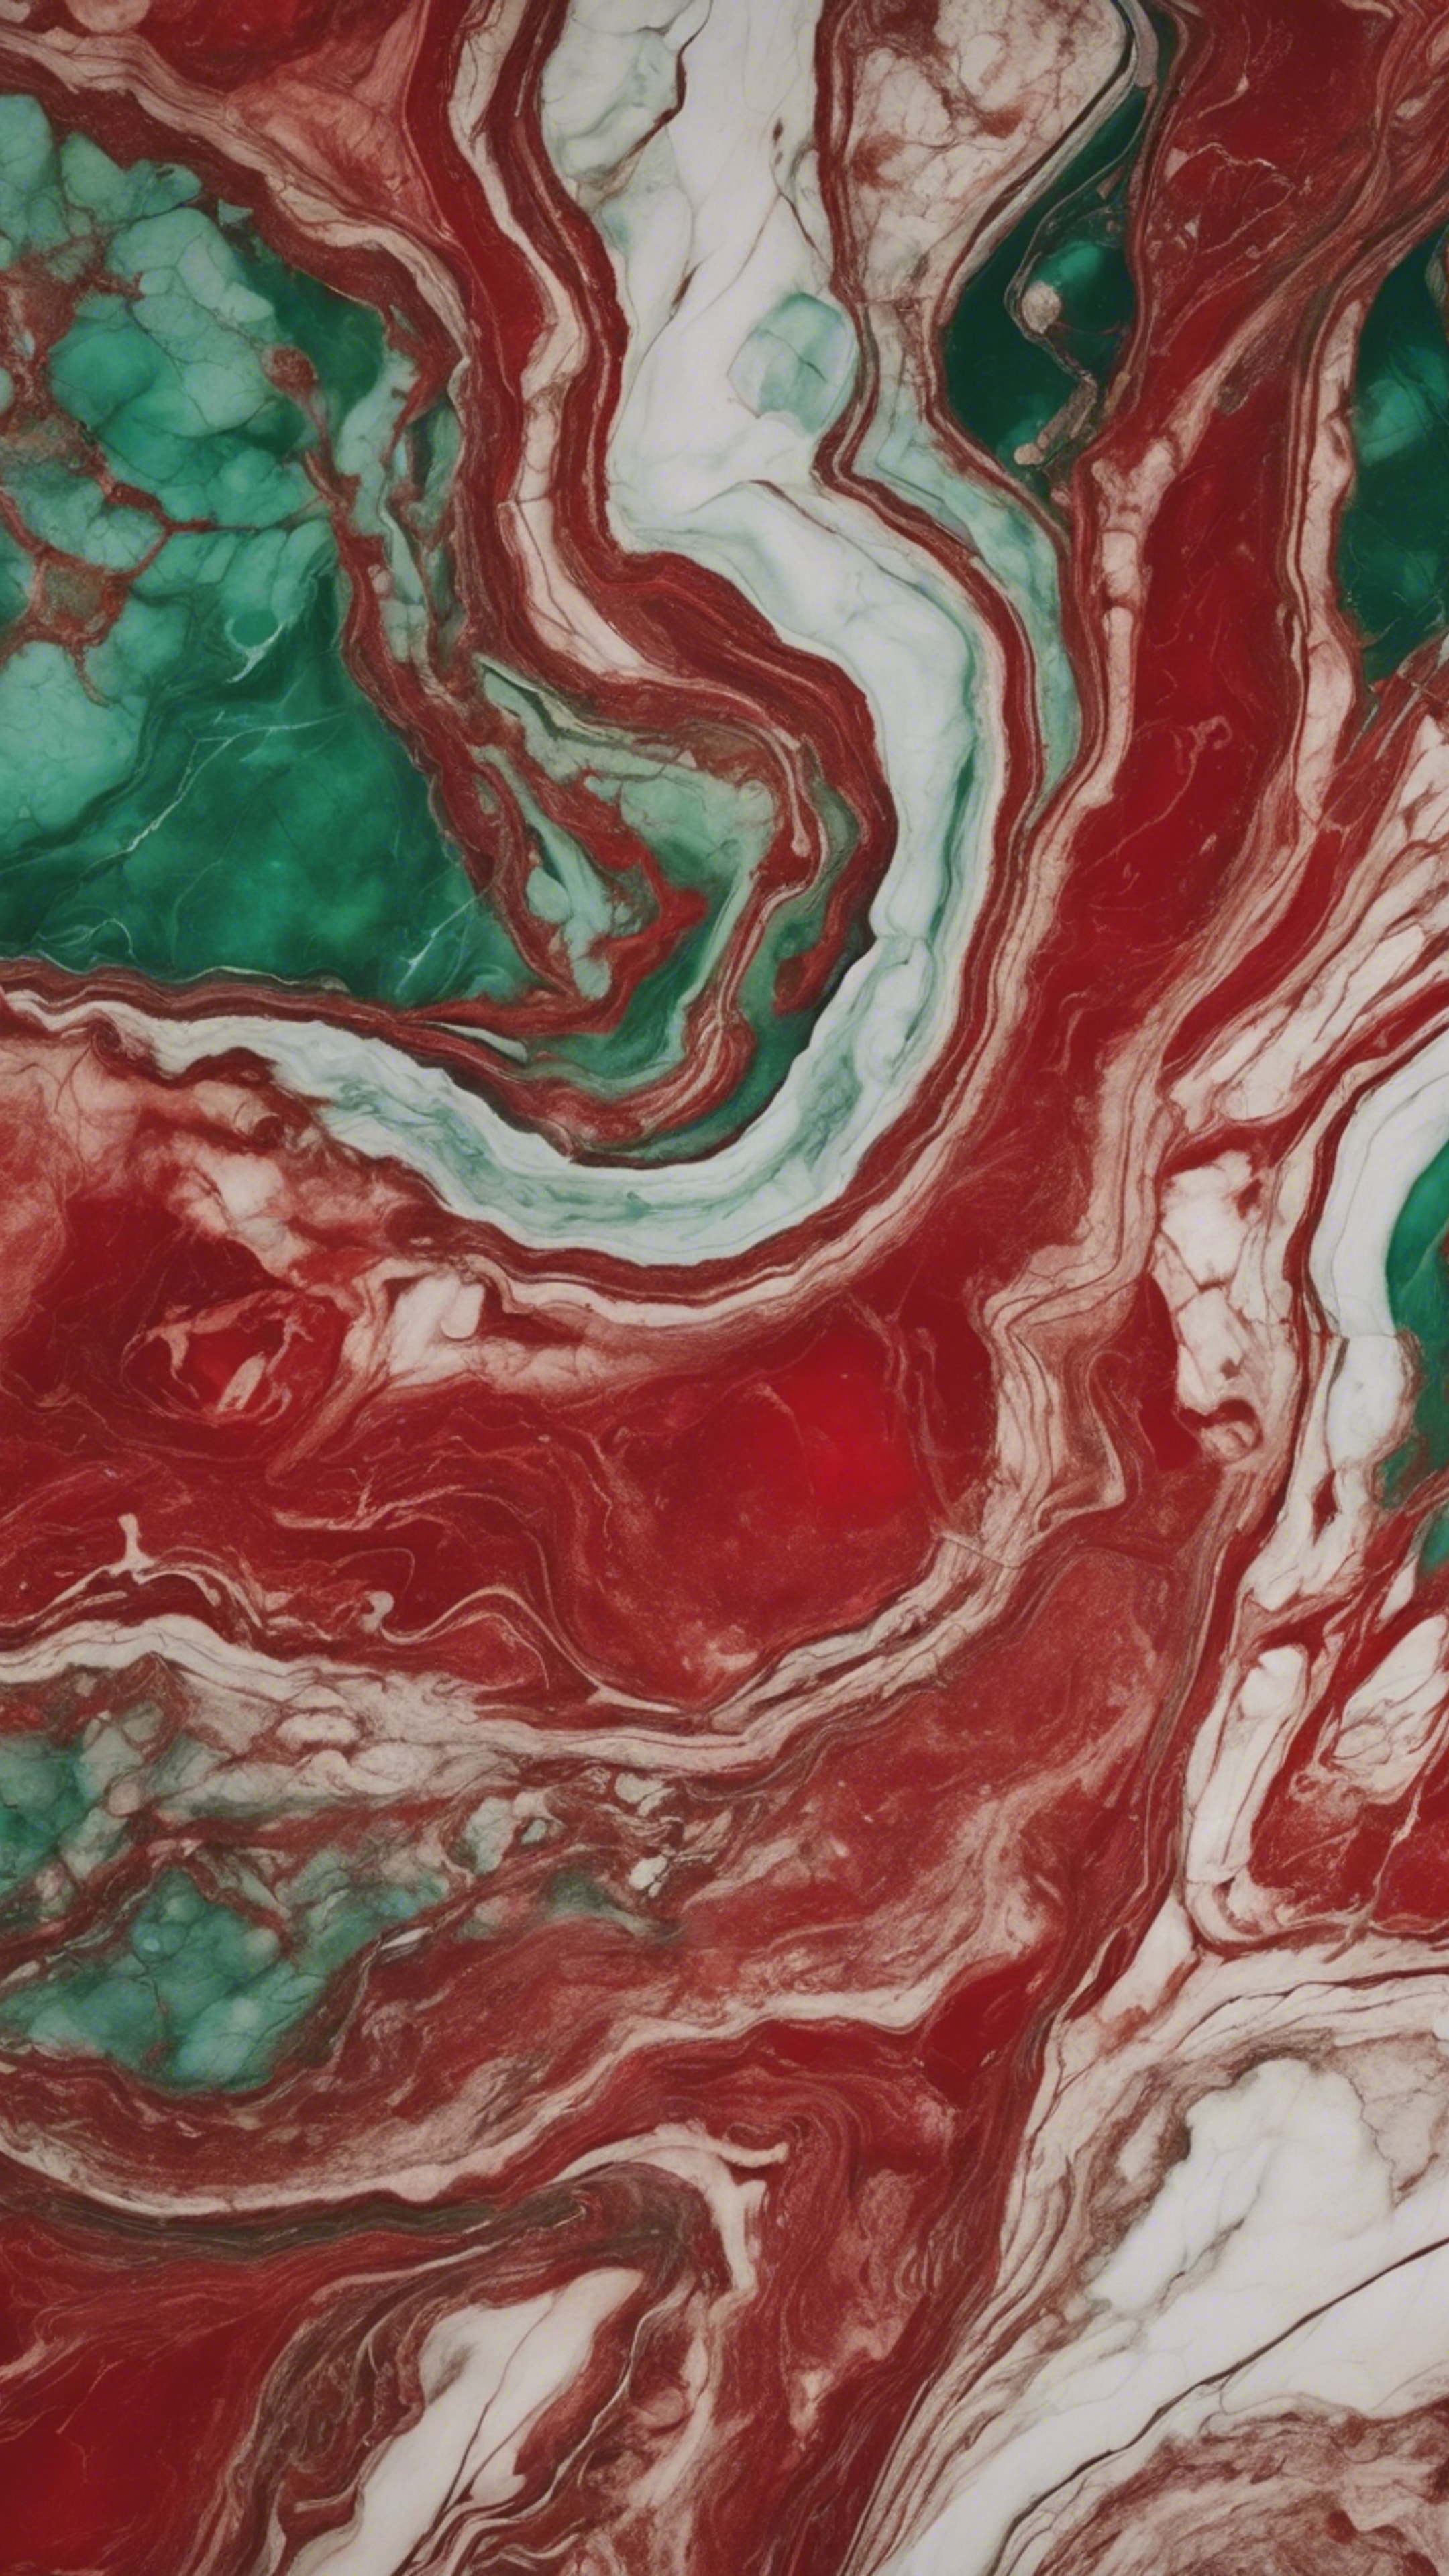 Elegant red and green marble pattern with veins running across. ផ្ទាំង​រូបភាព[edb4d3fbd47c4b239d5a]